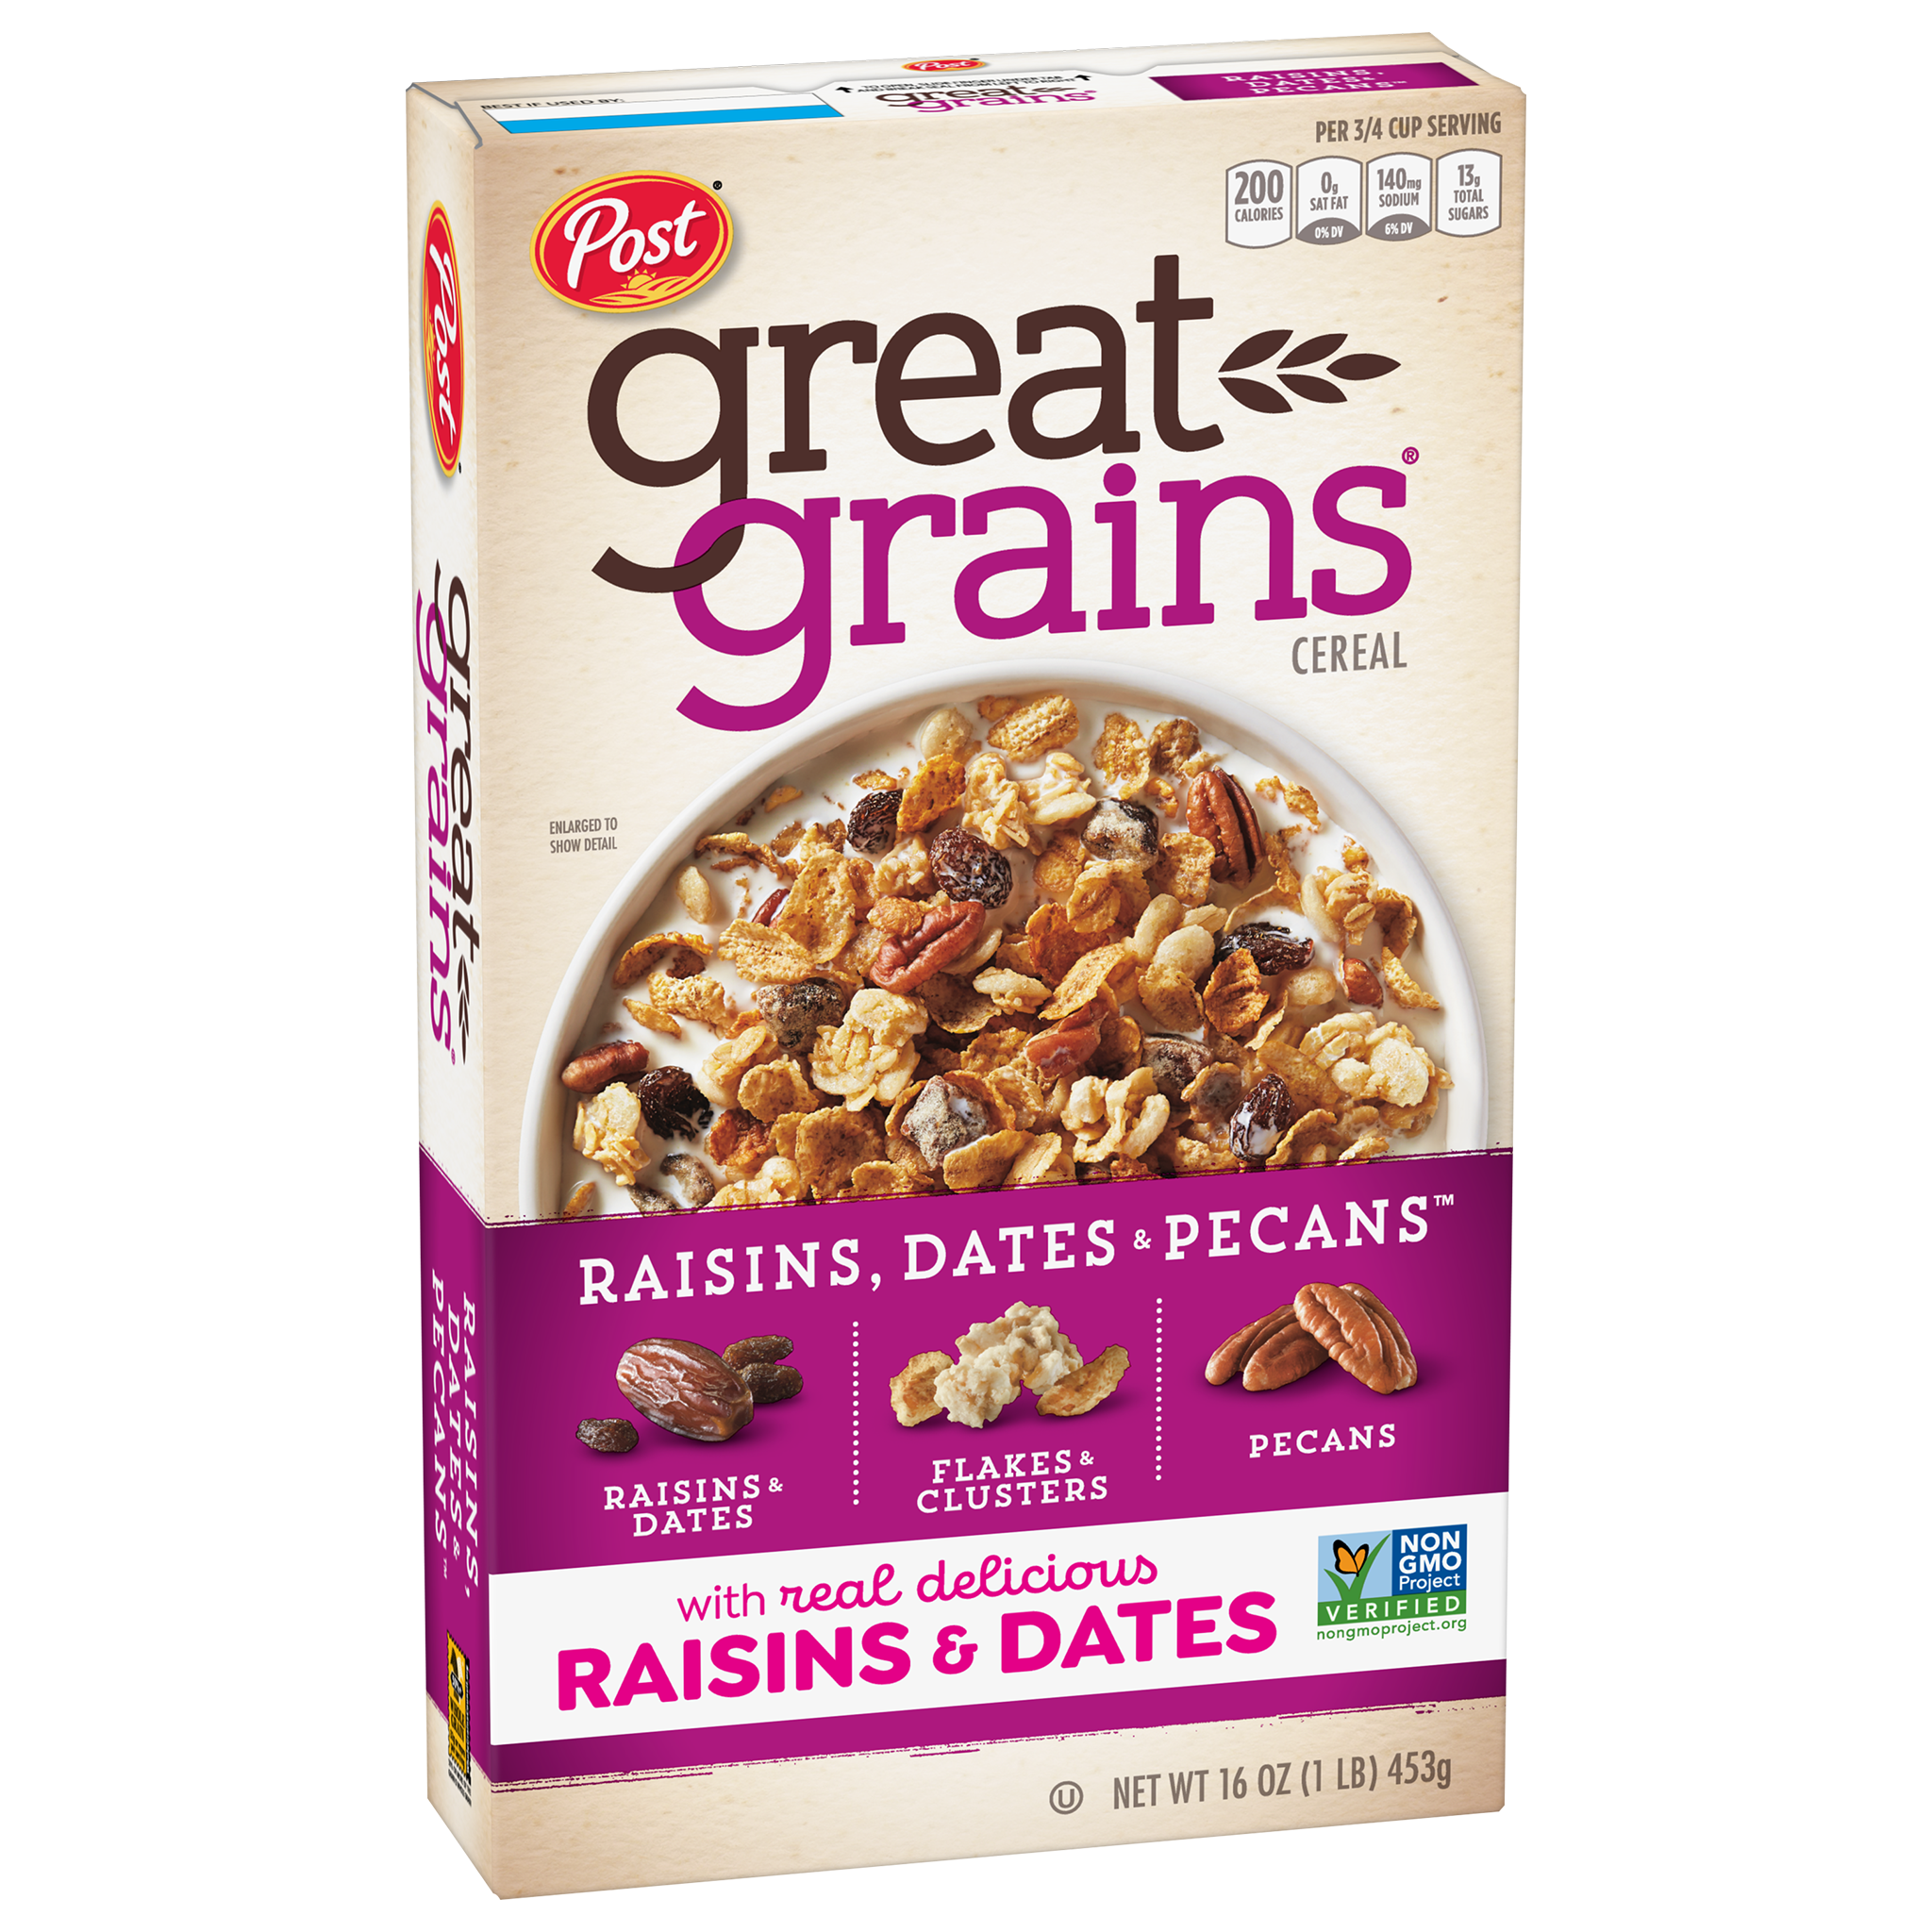 Great Grains® Raisins, Dates & Pecans™ cereal - Post Consumer Brands